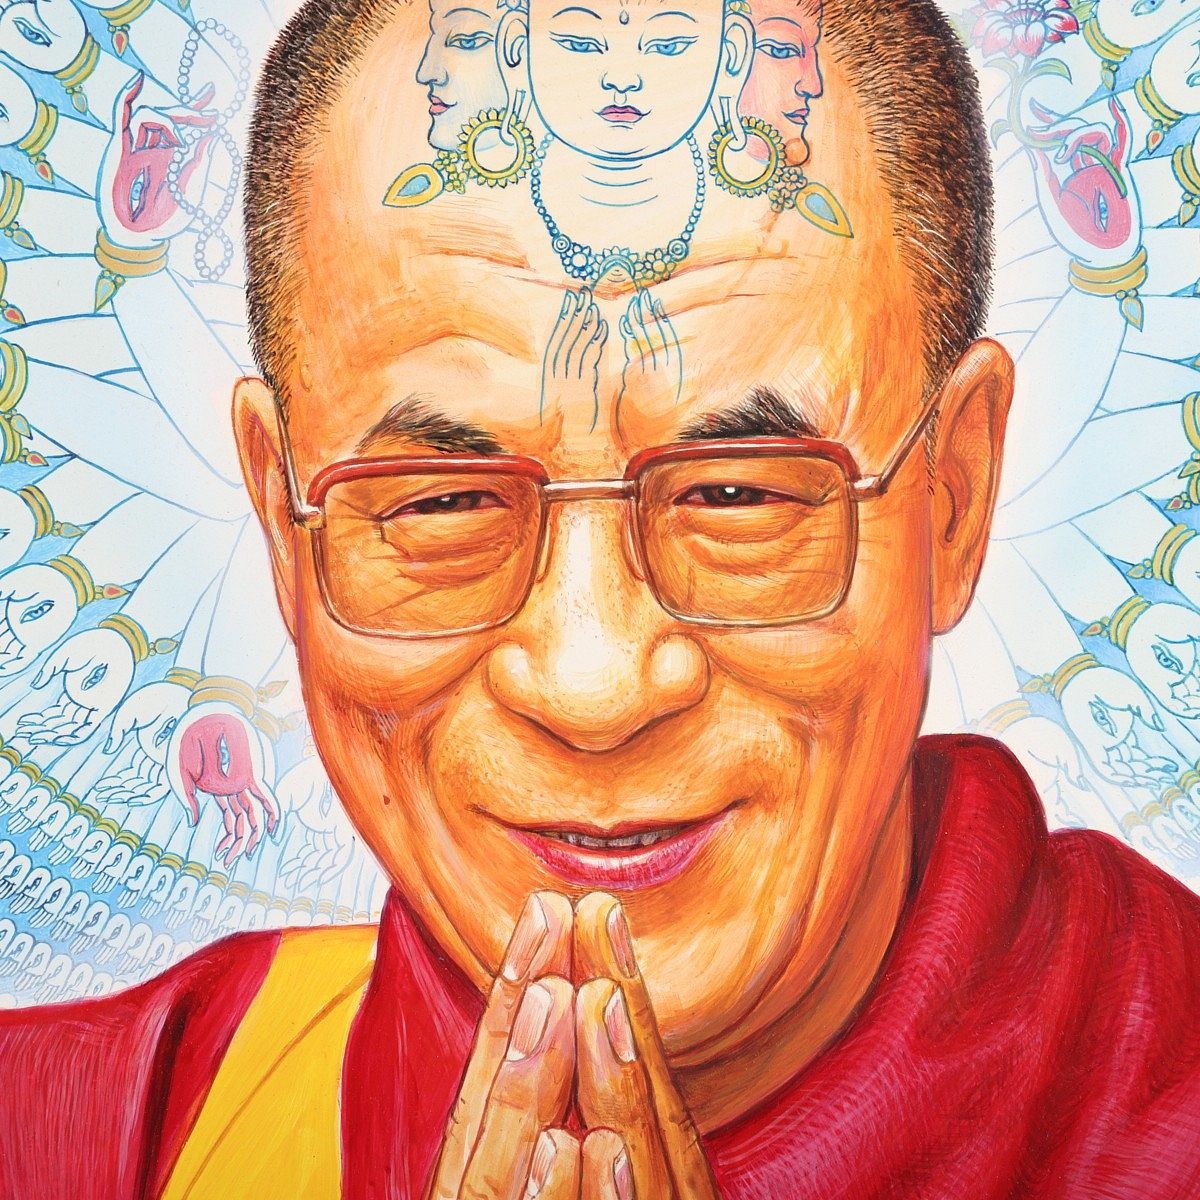 Artwork by Alex Grey, Dalai Lama, Made of Acrylic on wood panel